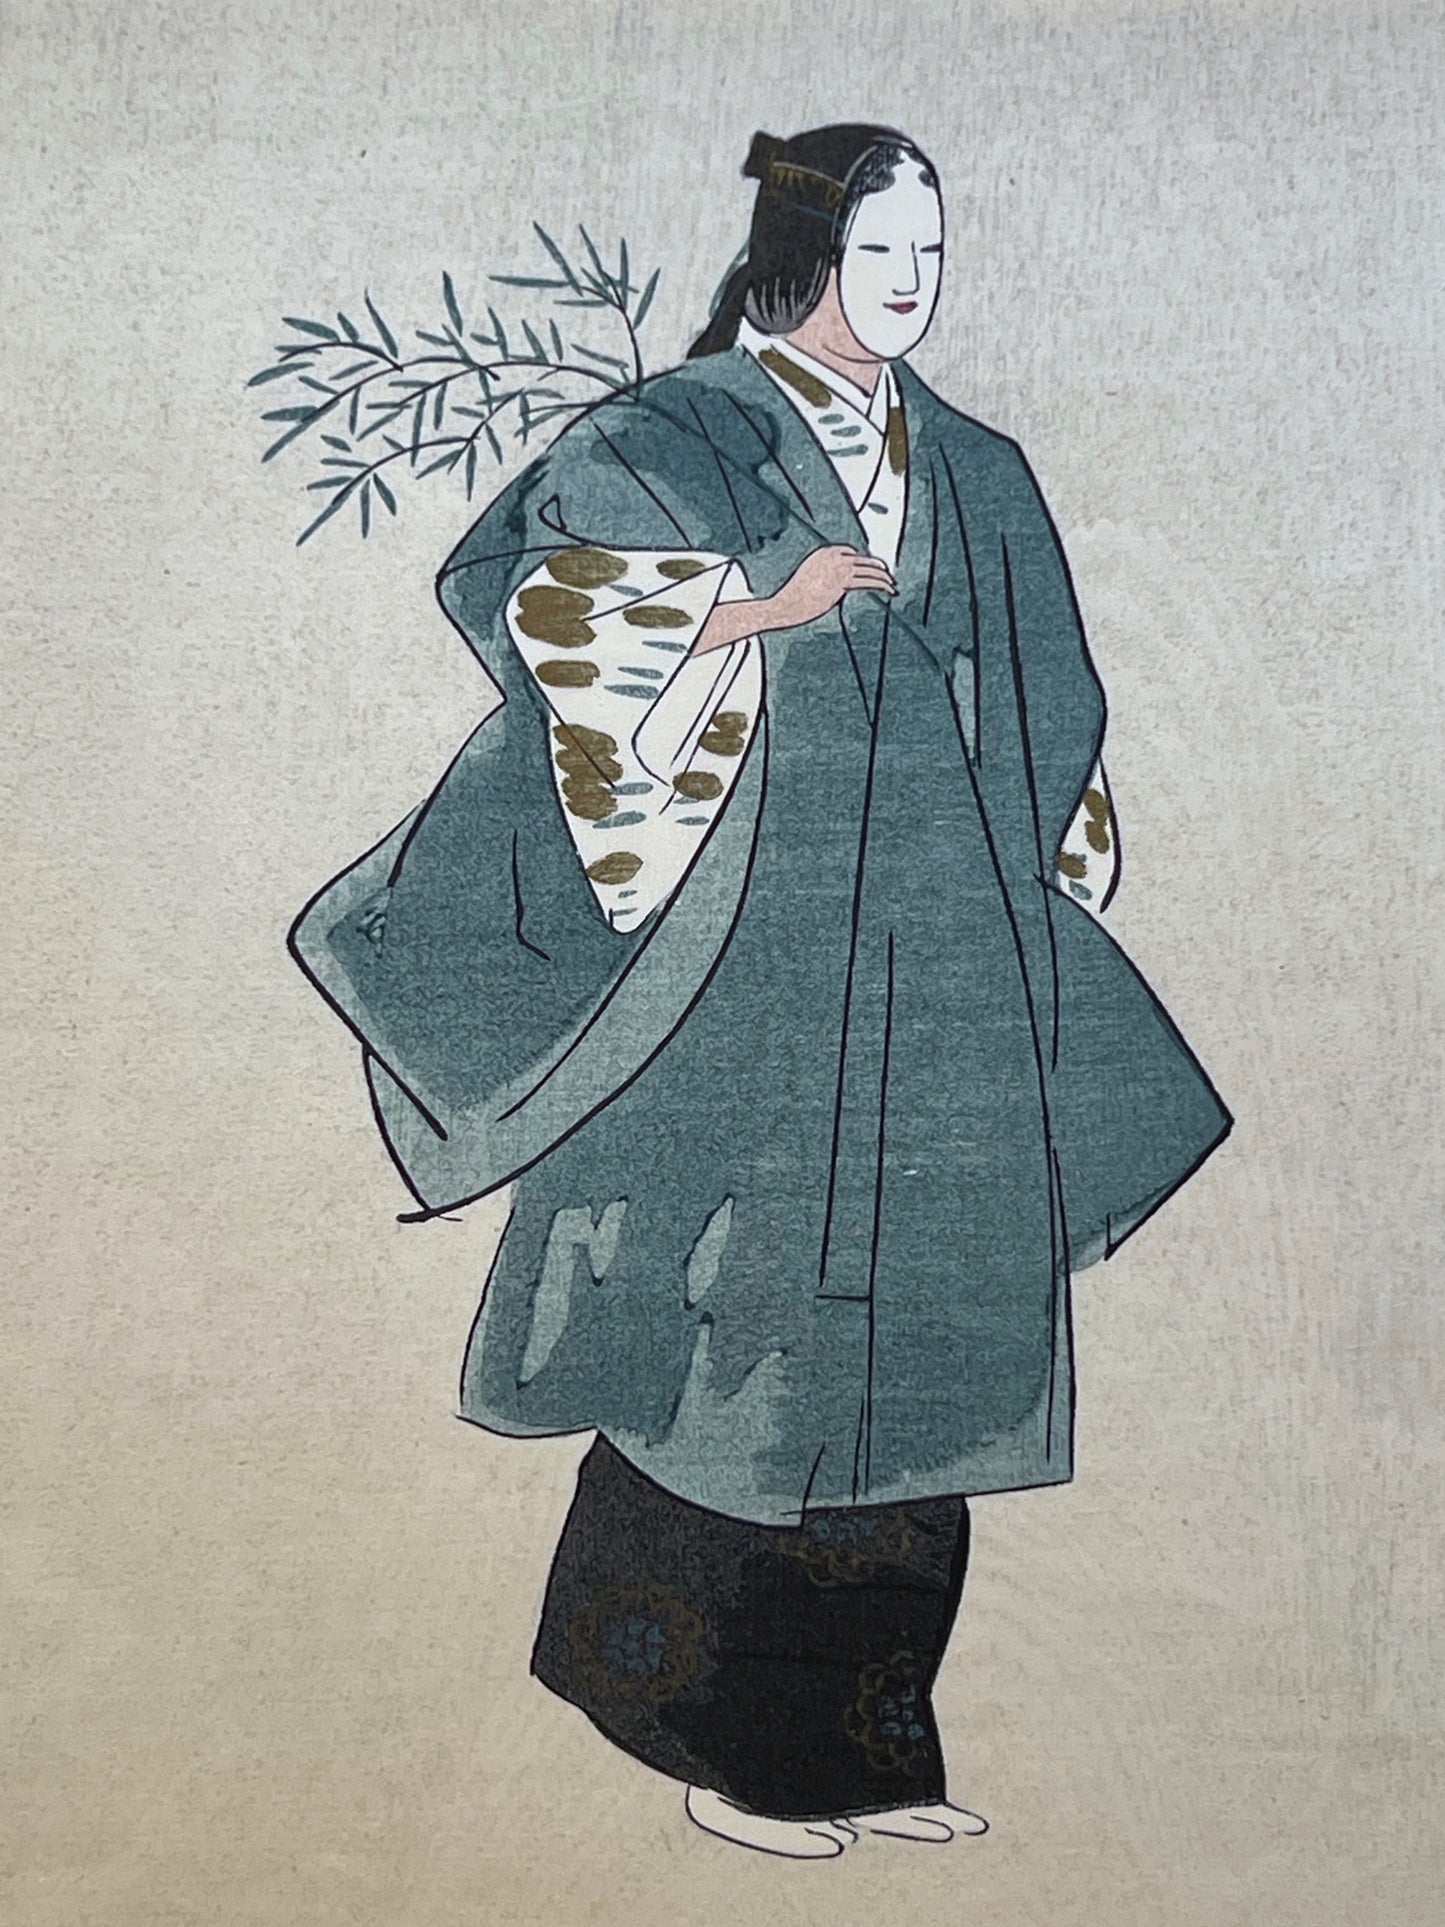 estampe japonaise kogyo tsukioka acteur de théâtre no branche de bambou et kimono bleu et blanc